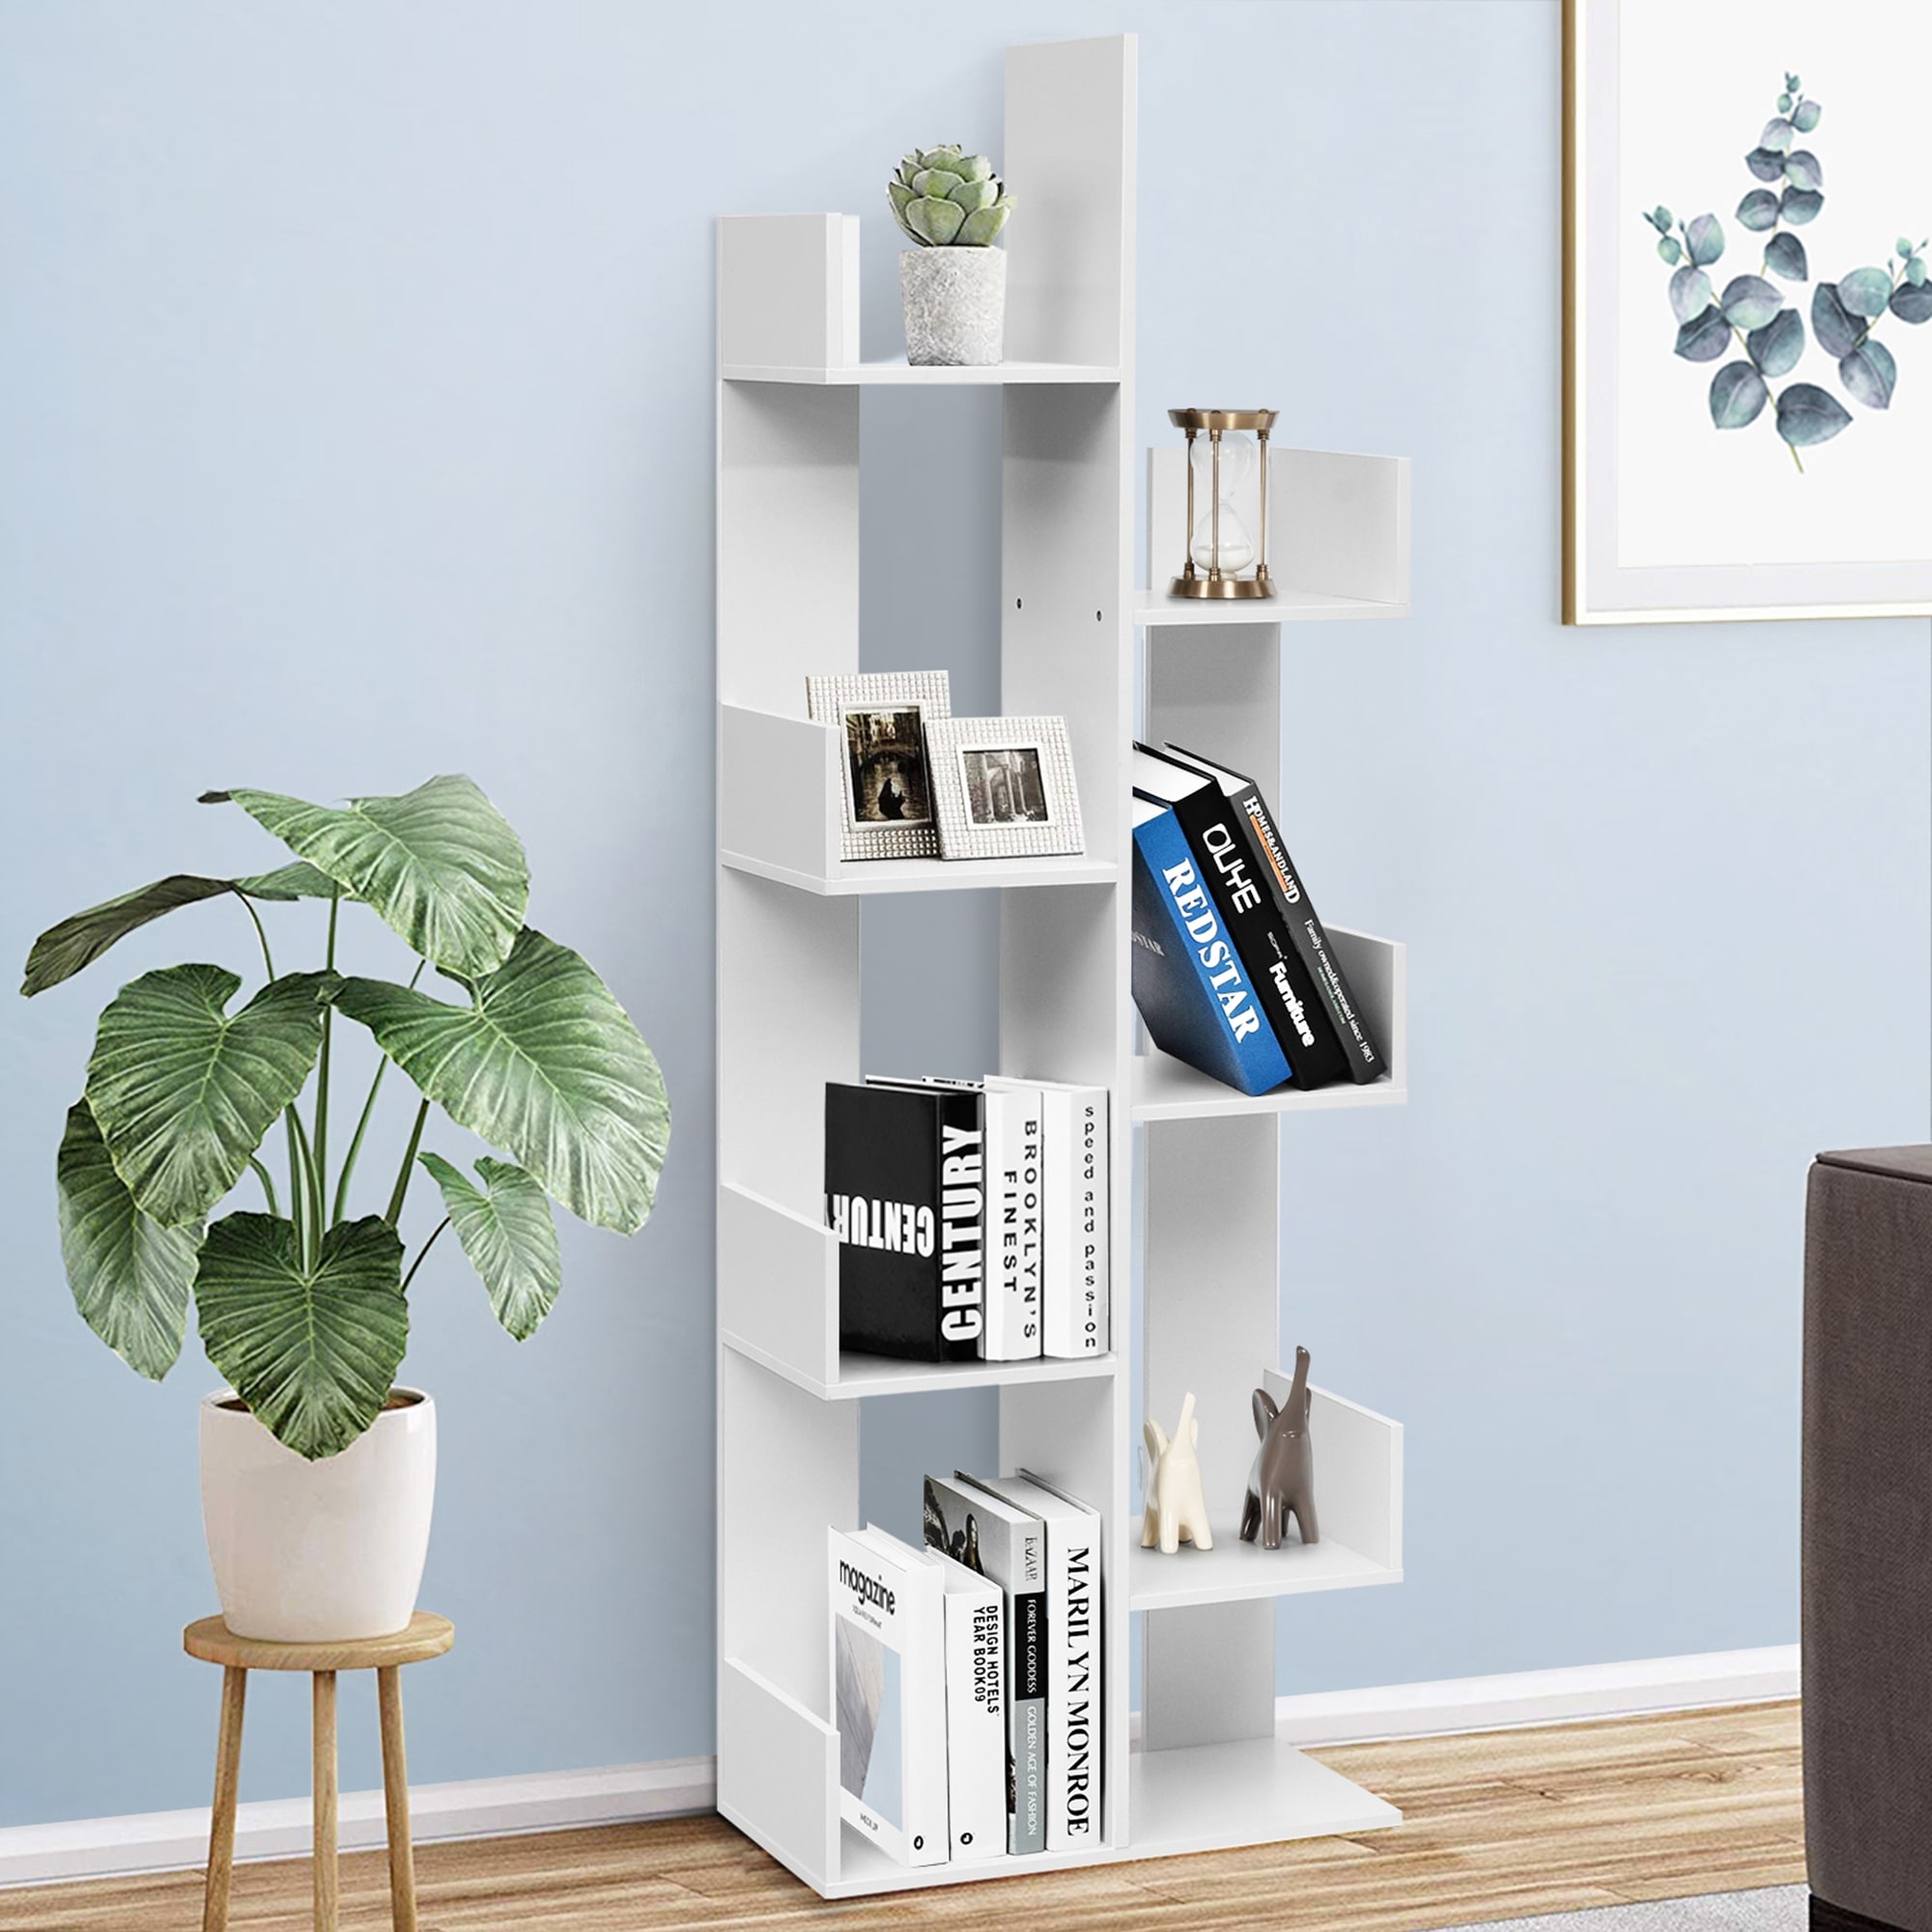 4 Tier Kids Small Bookshelf 3 Shelf, Book Organizer Storage Open Shelf Rack, Display Shelves for Bedroom Living Room Bathroom Office, White Latitude R